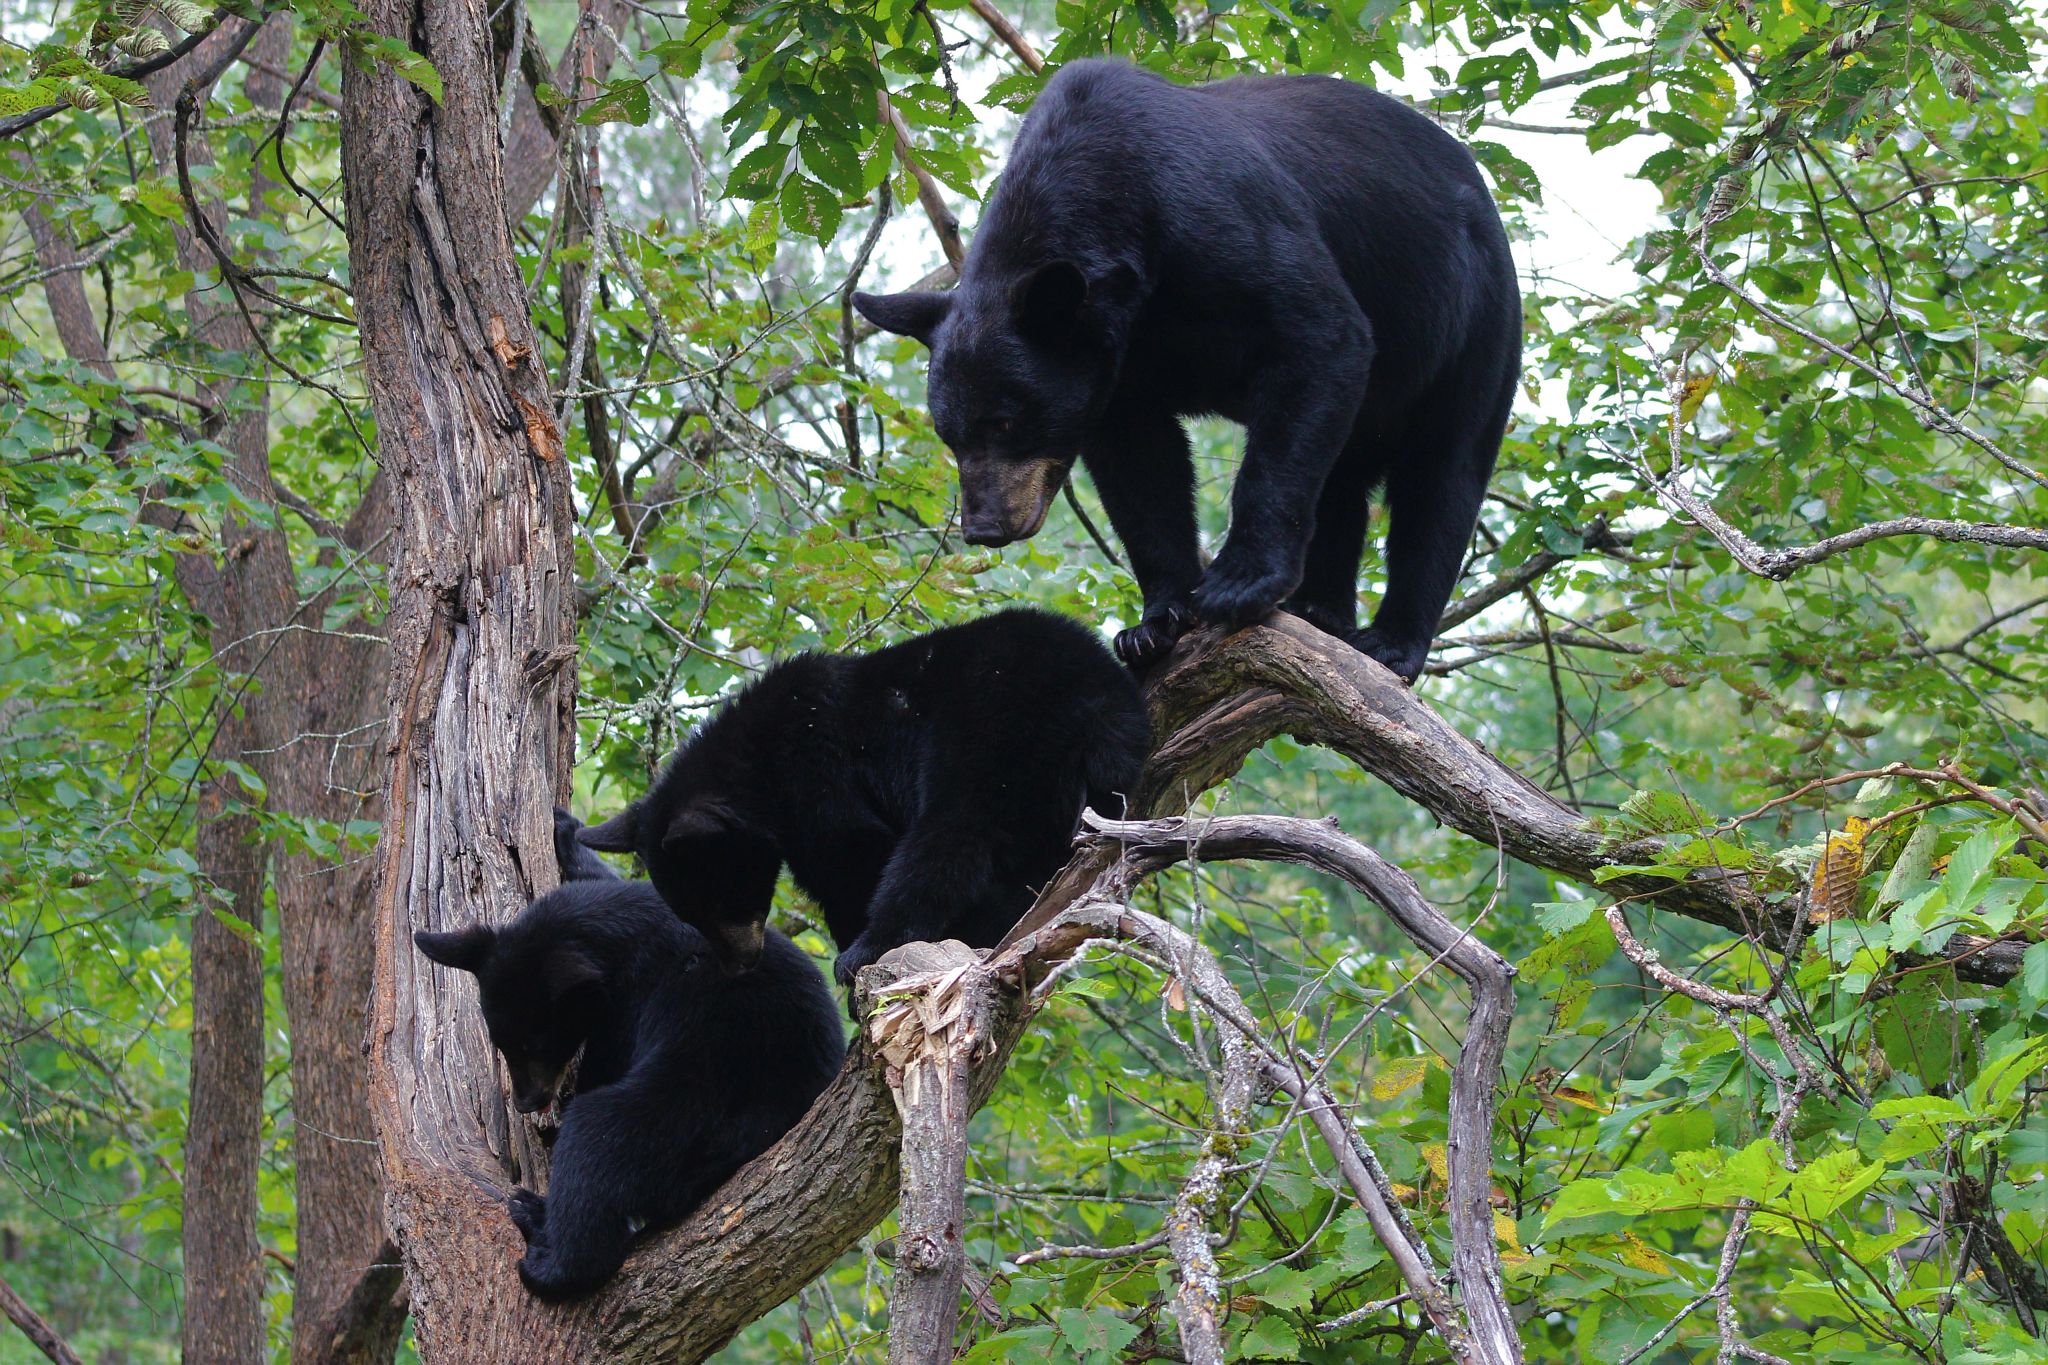 Black bears climbing in a tree